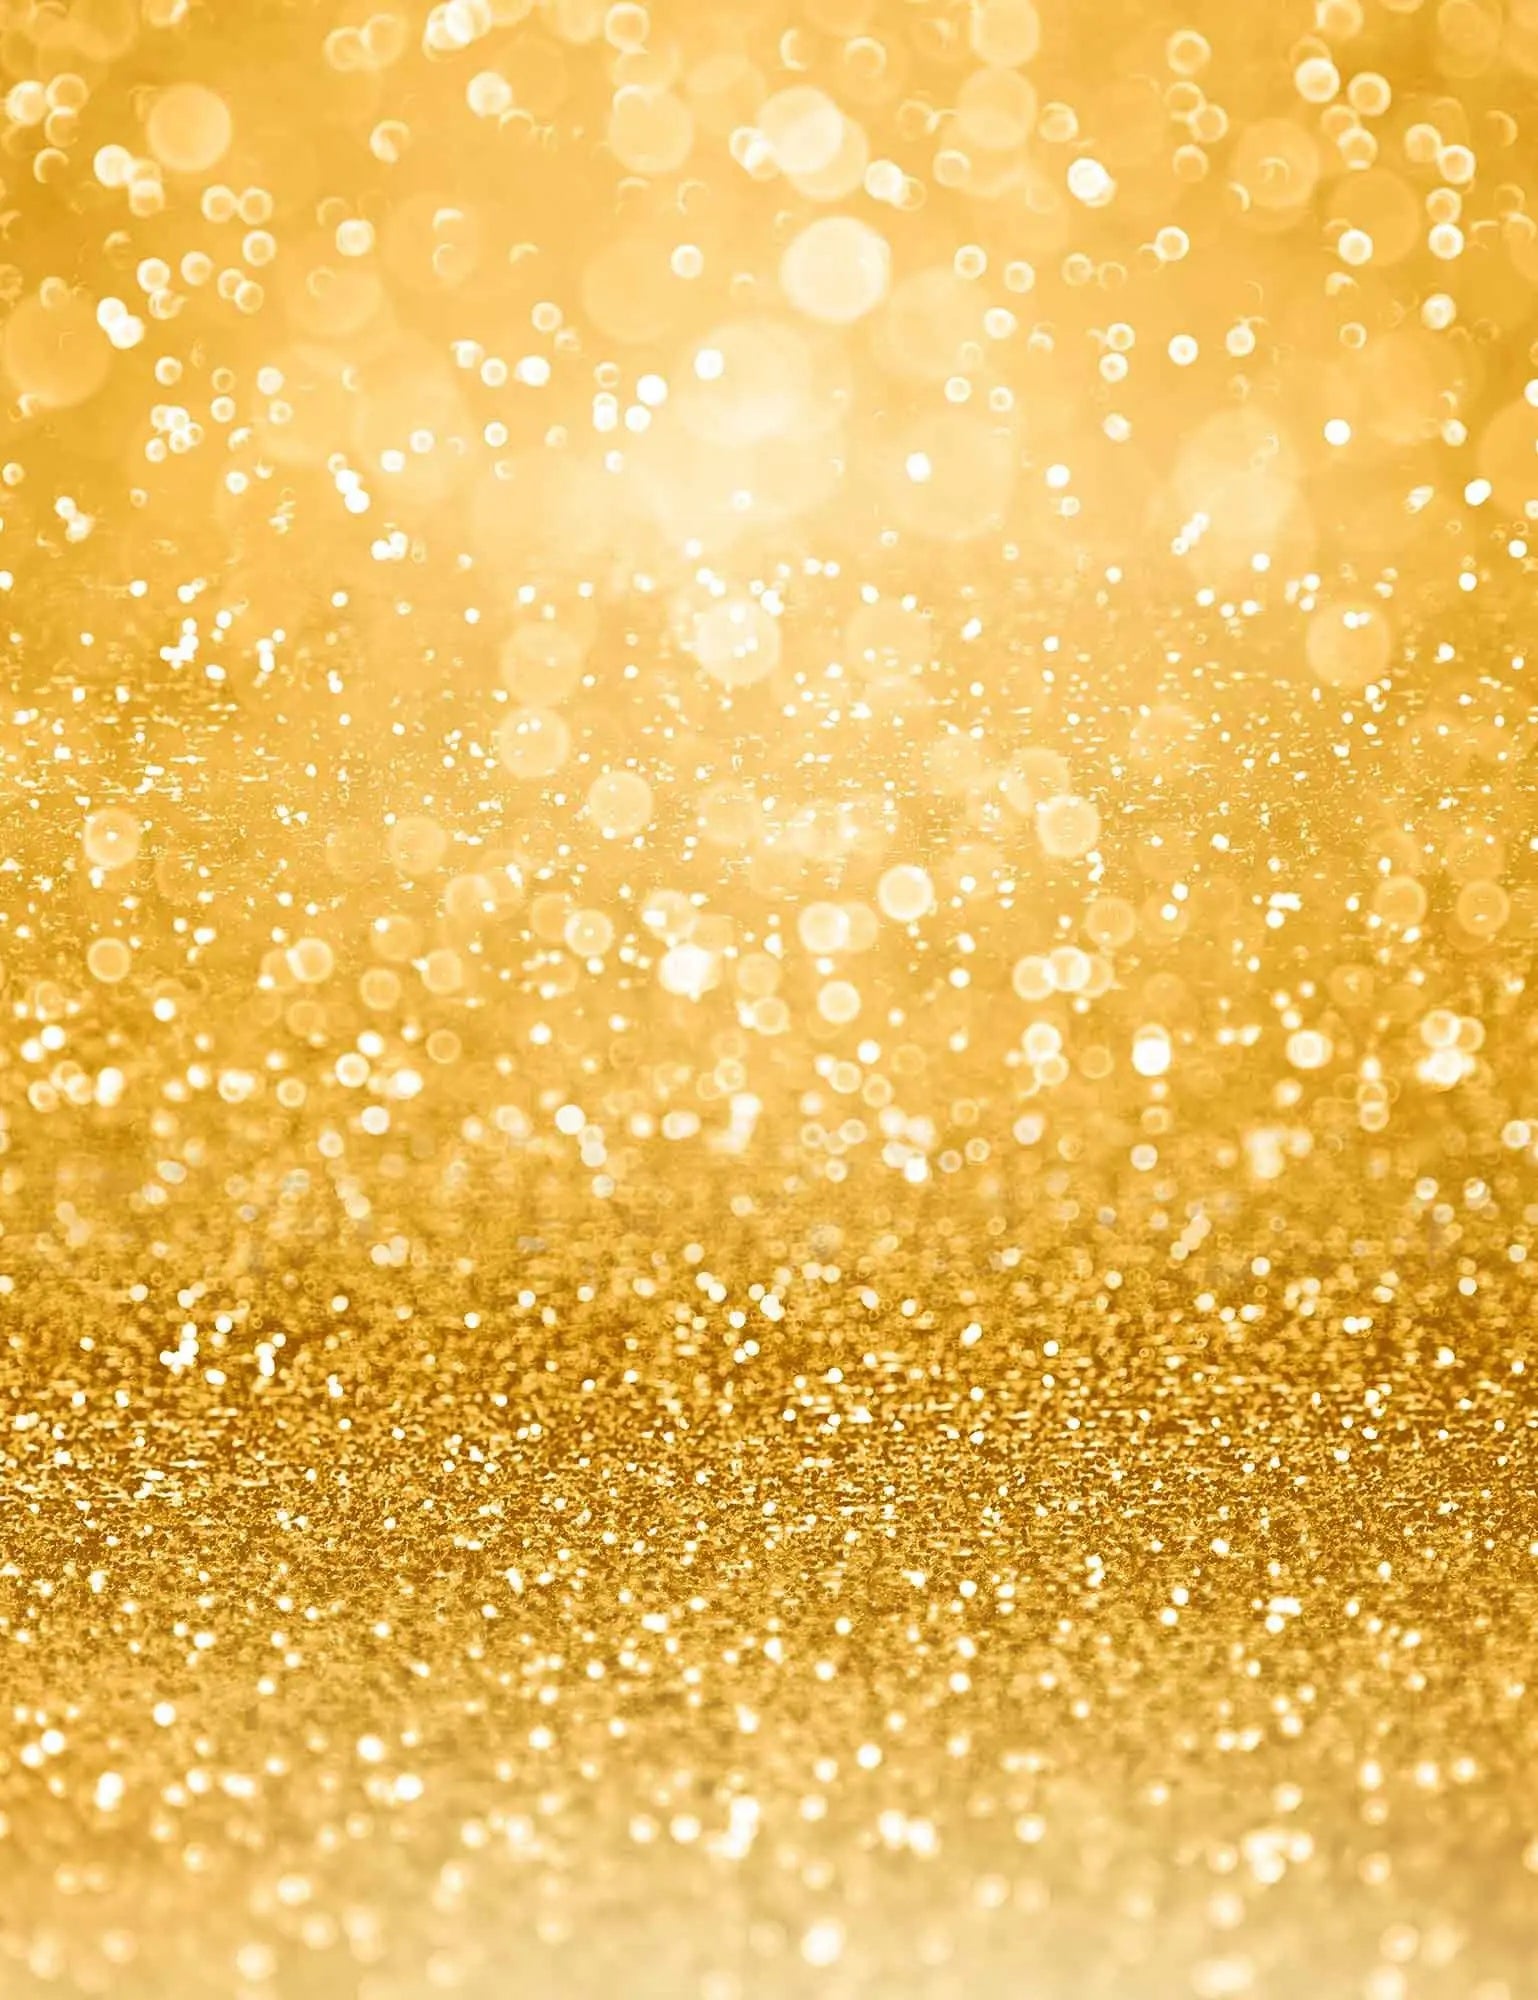 Litter Star Bokeh And Golden Glitter  Background For Christmas Backdrop Shopbackdrop